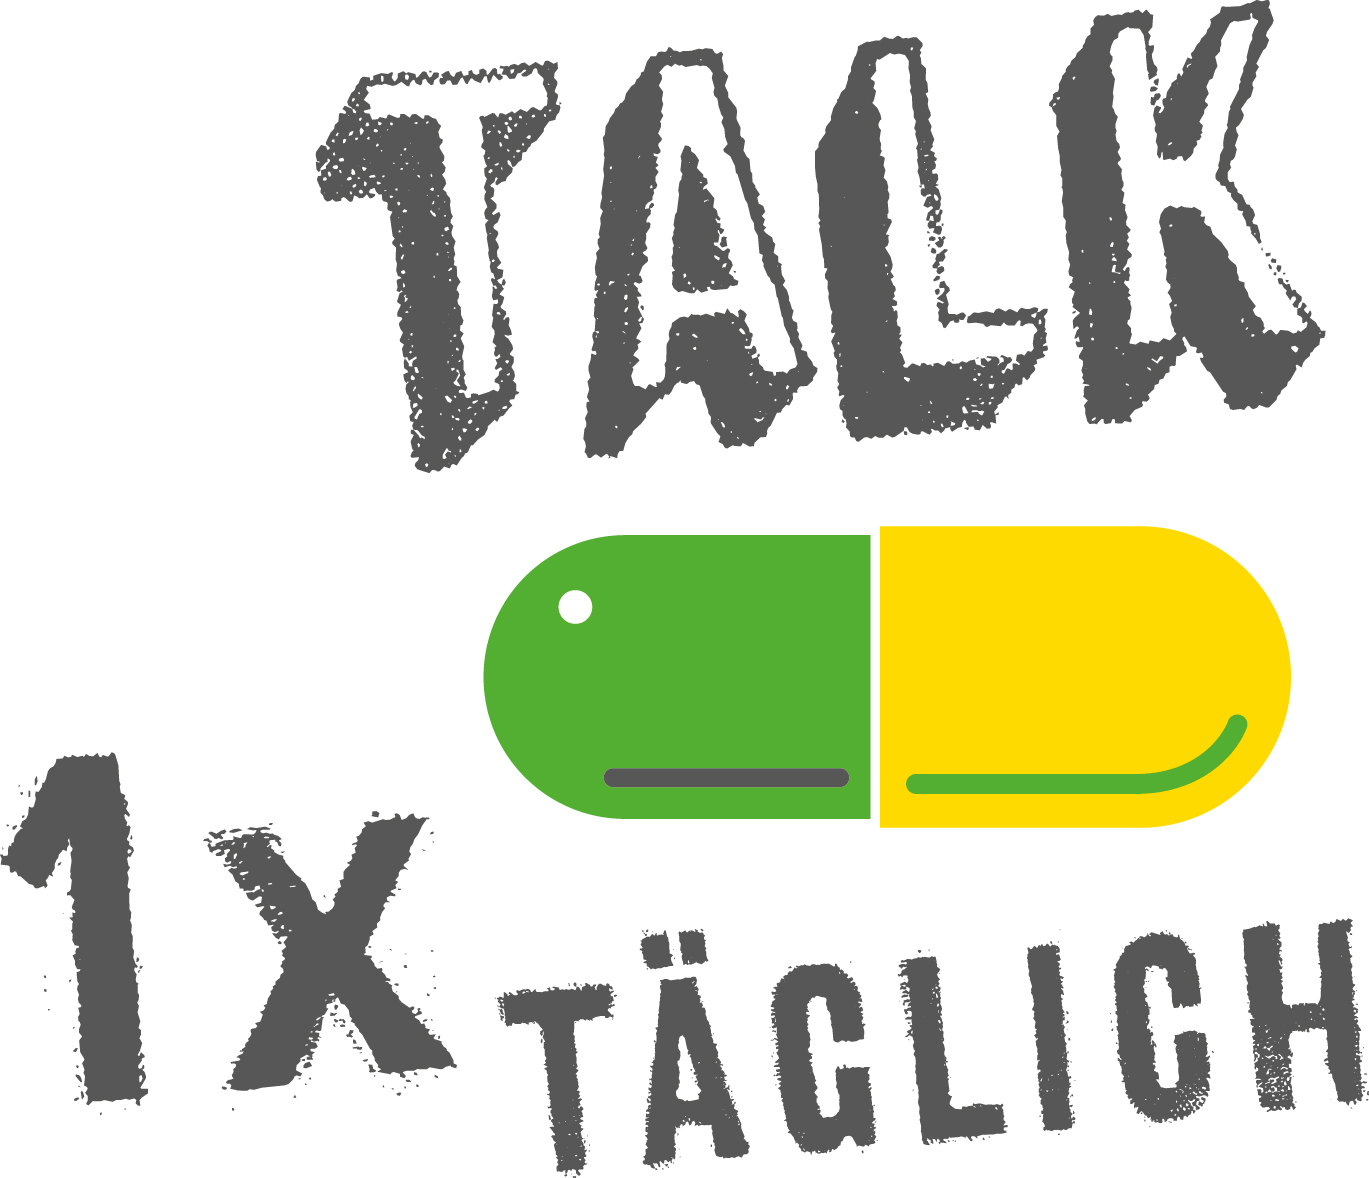 Talk 1 mal täglich (Illustration mit Pille)